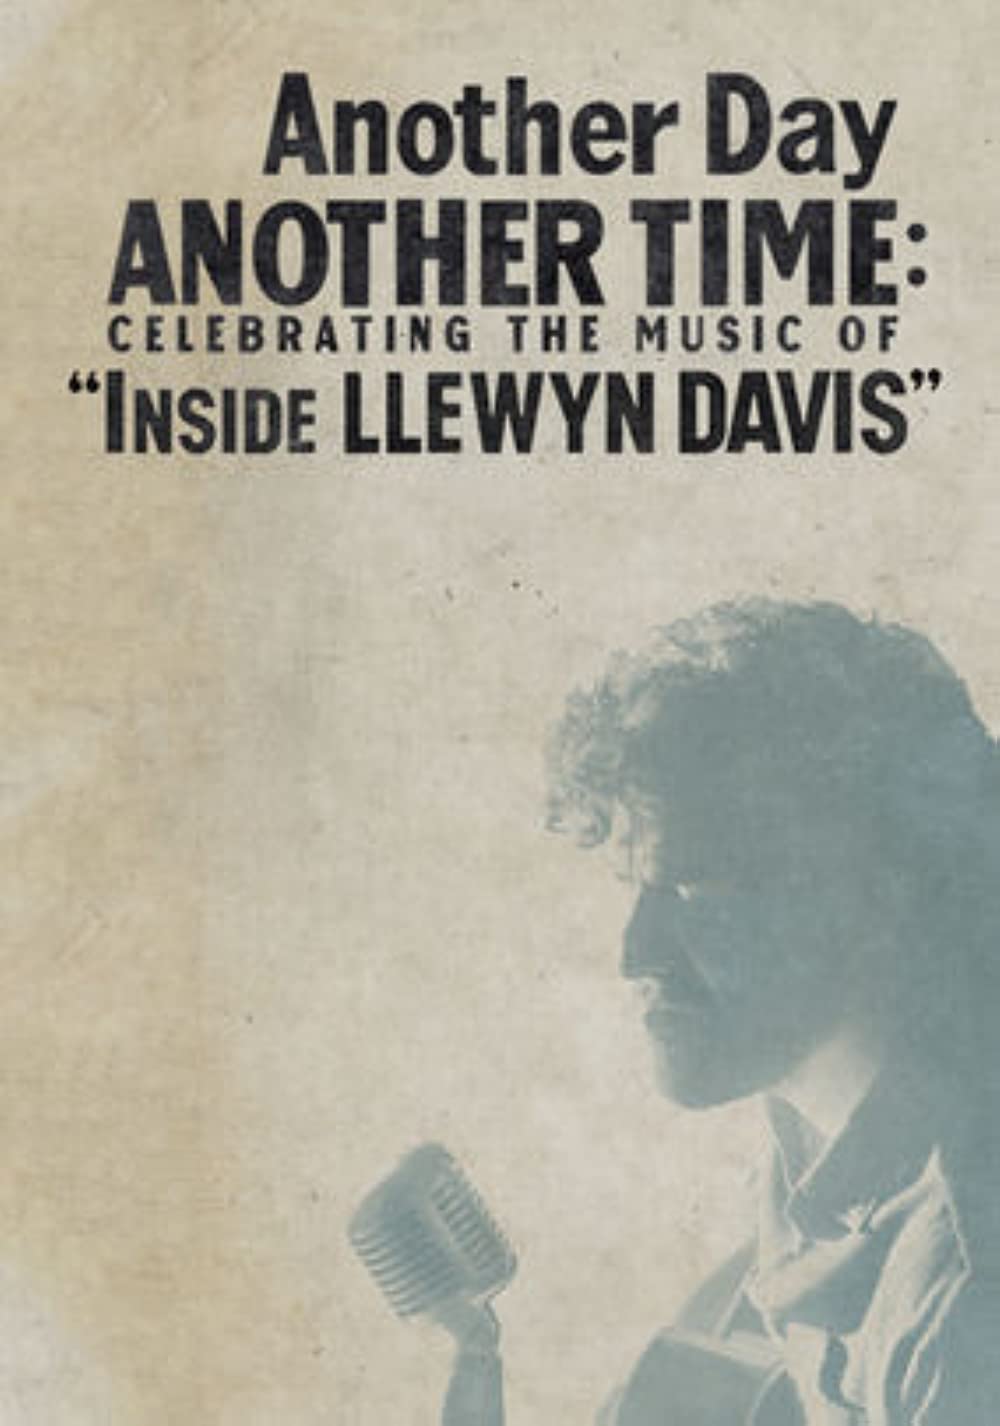 Filmbeschreibung zu Another Day, Another Time: Celebrating the Music of Inside Llewyn Davis